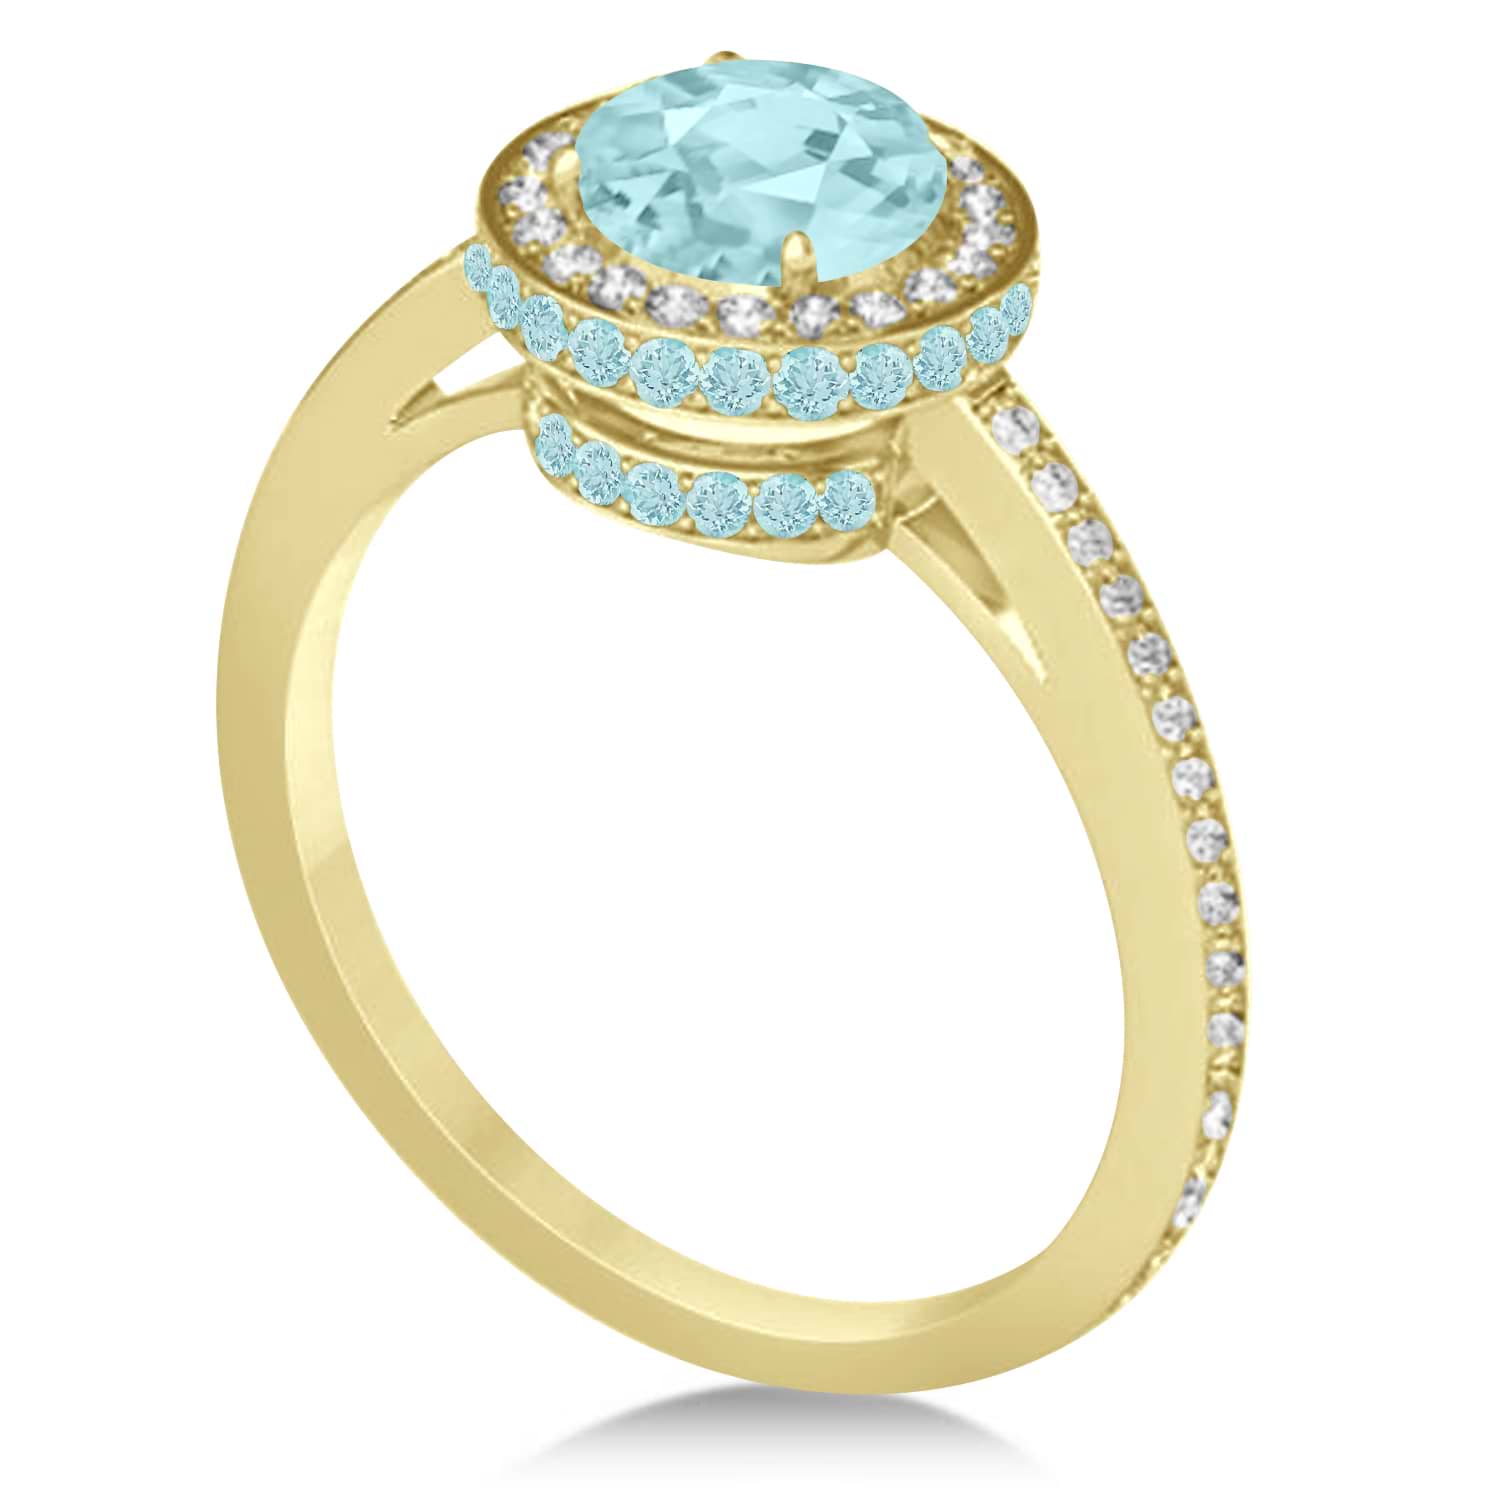 Oval Aquamarine & Diamond Halo Engagement Ring 14k Yellow Gold (1.60ct)